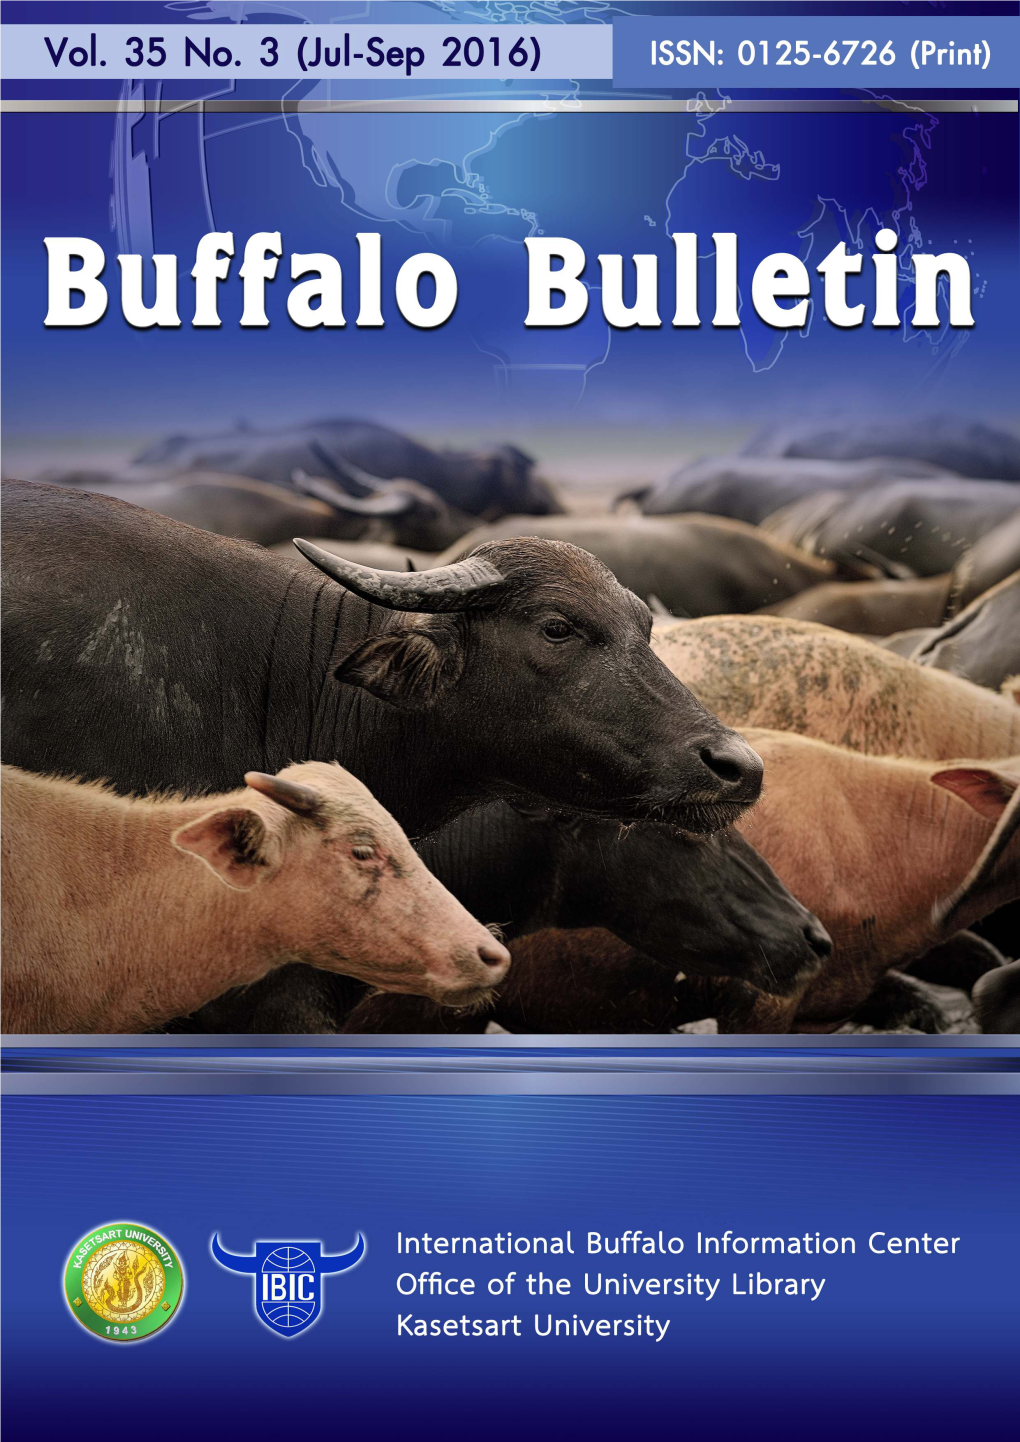 Buffalo Bulletin (July-September 2016) Vol.35 No. 3